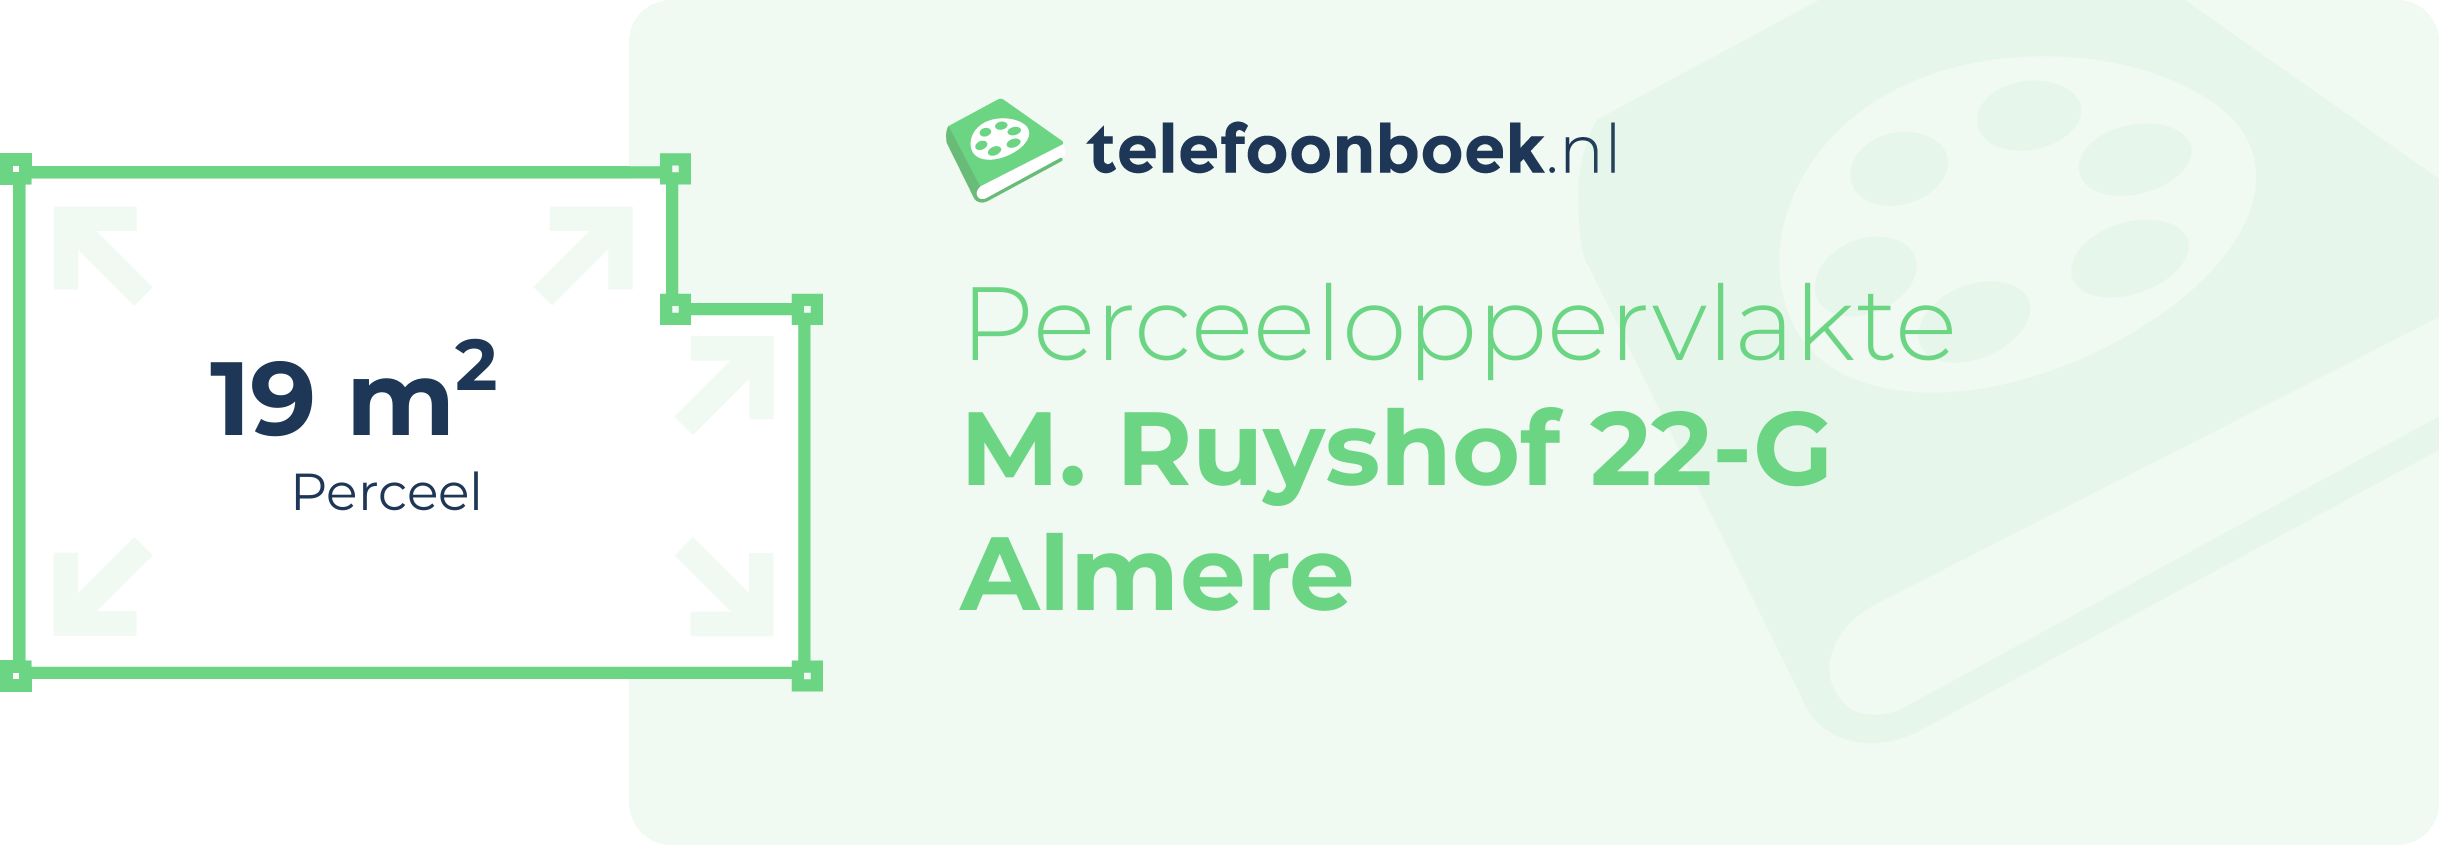 Perceeloppervlakte M. Ruyshof 22-G Almere